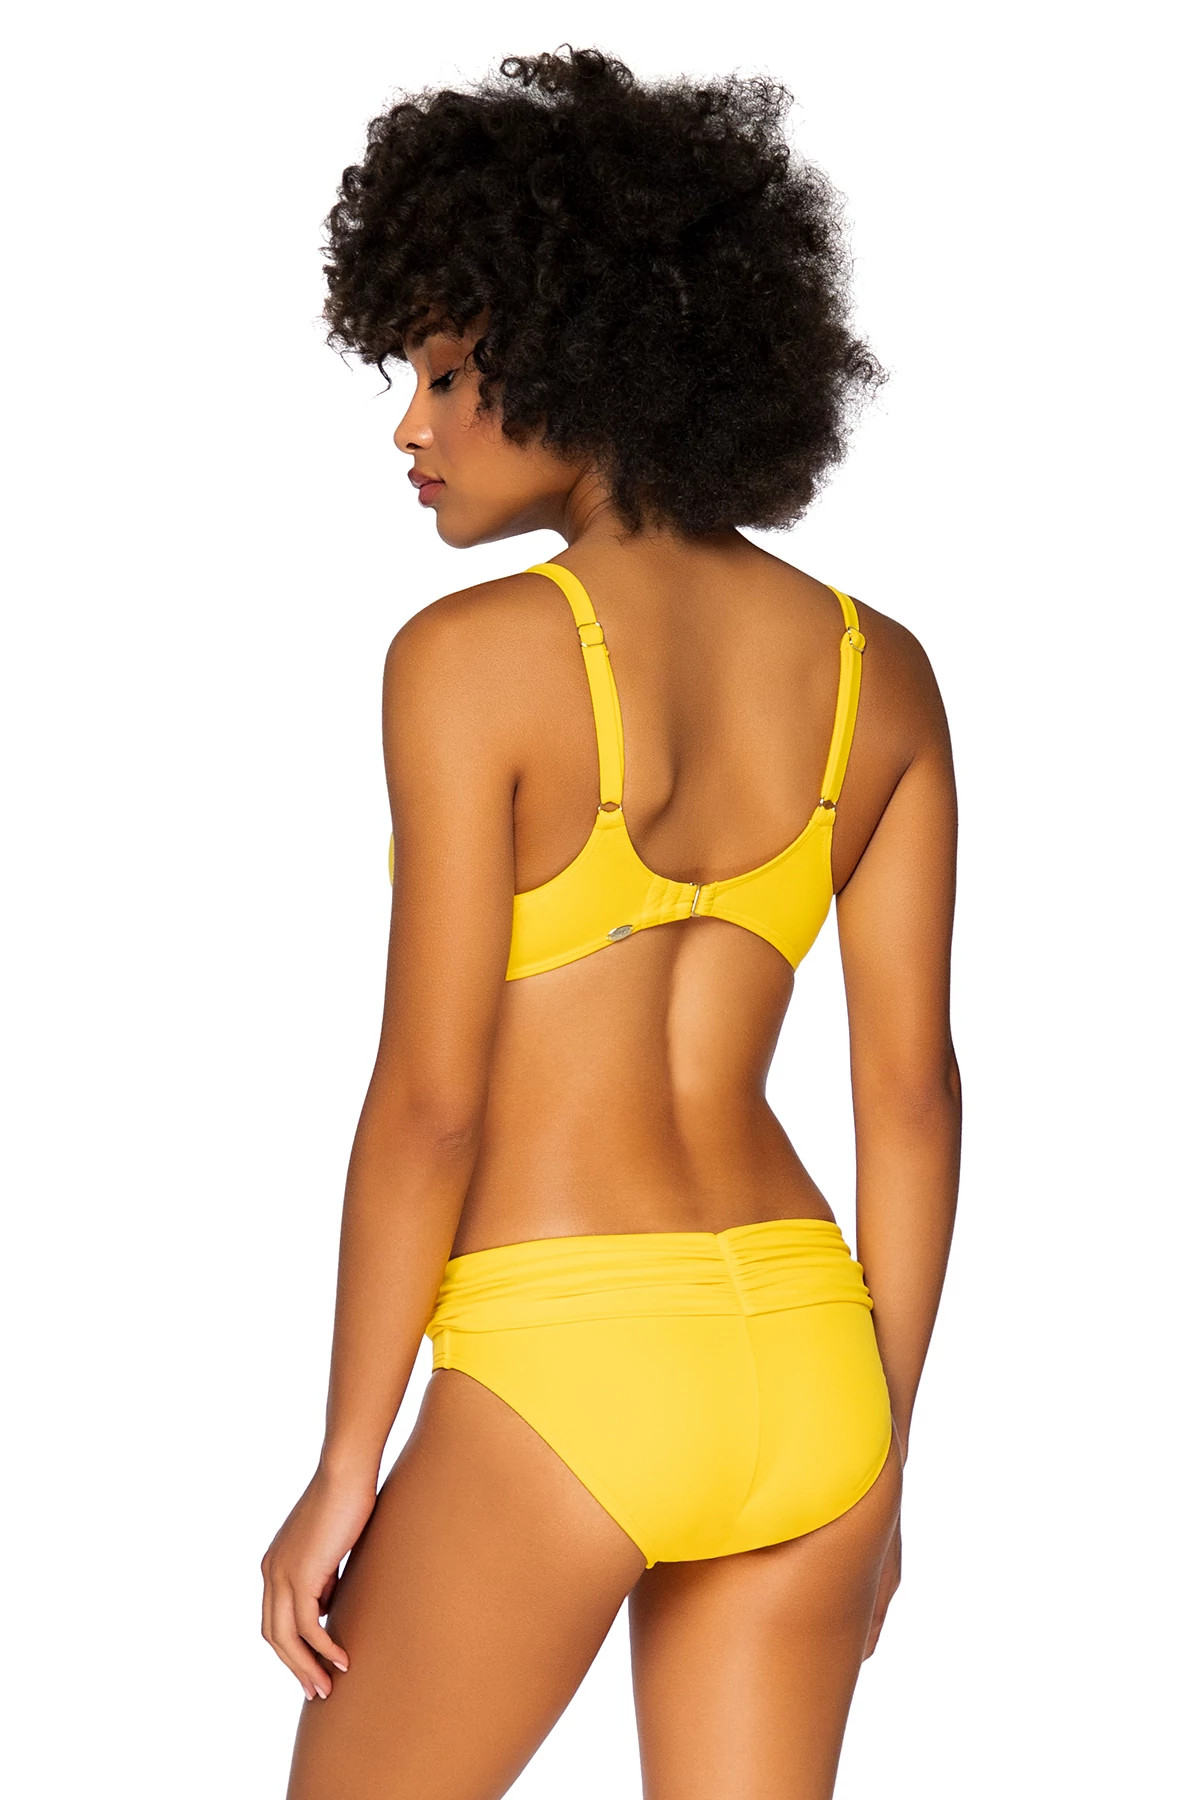 HAWAIIAN SUN Carmen Underwire Bikini Top (D+ Cup) image number 2